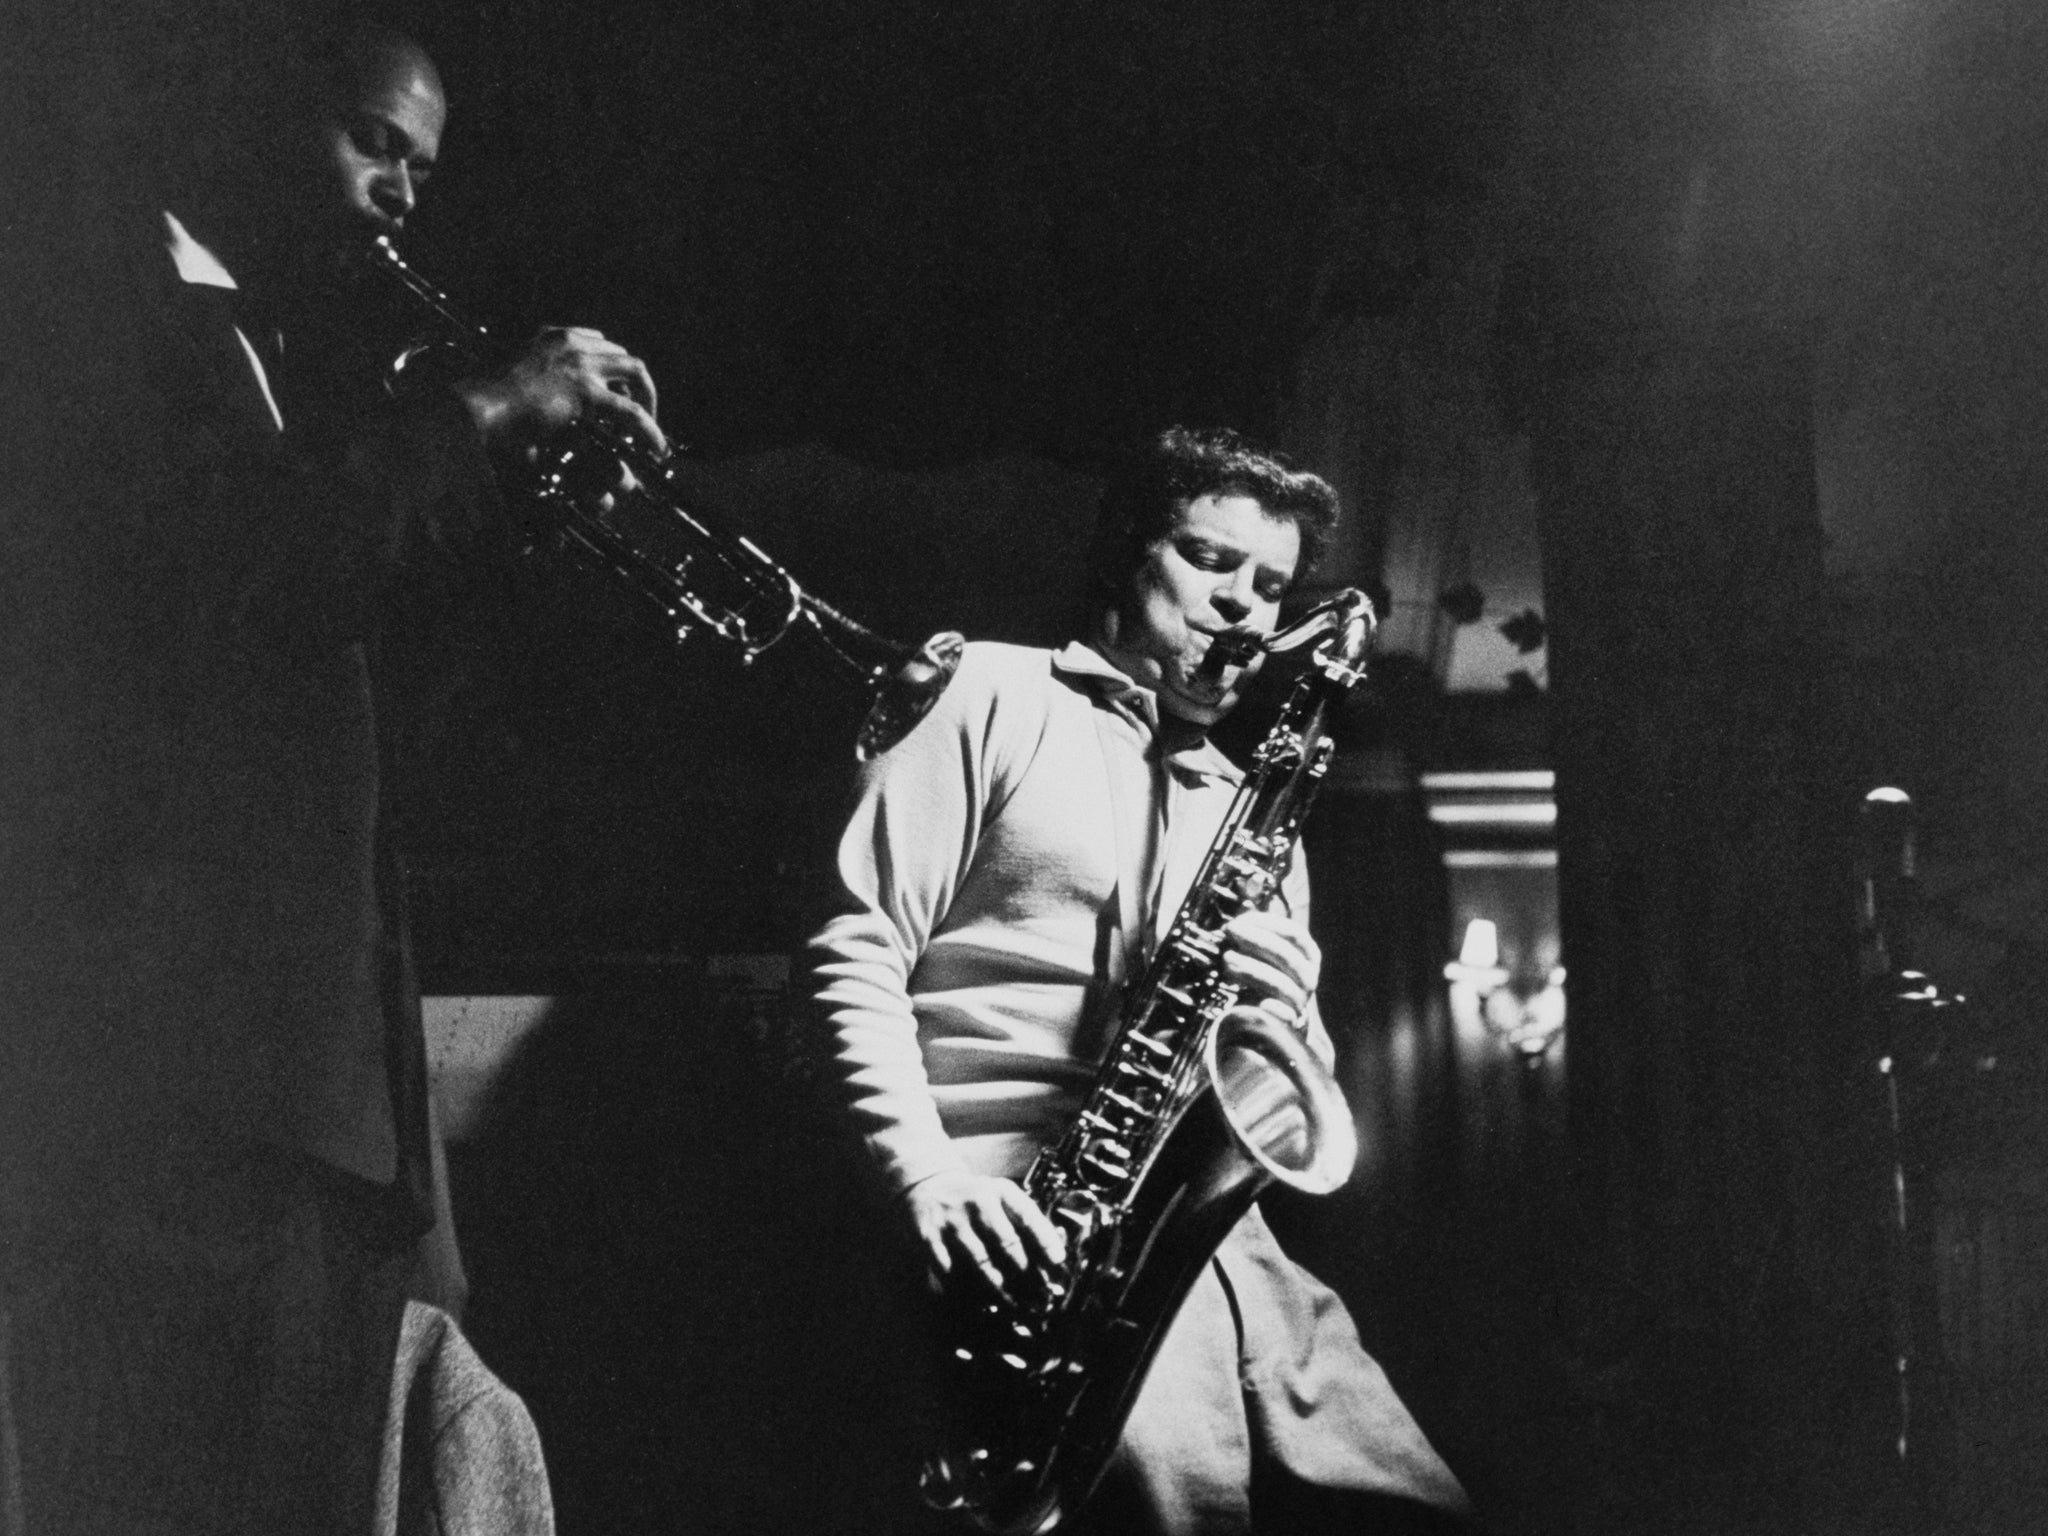 English jazz multi-instrumentalist, Edward Brian "Tubby" Hayes (1935 - 1973) playing the saxophone, circa 1964